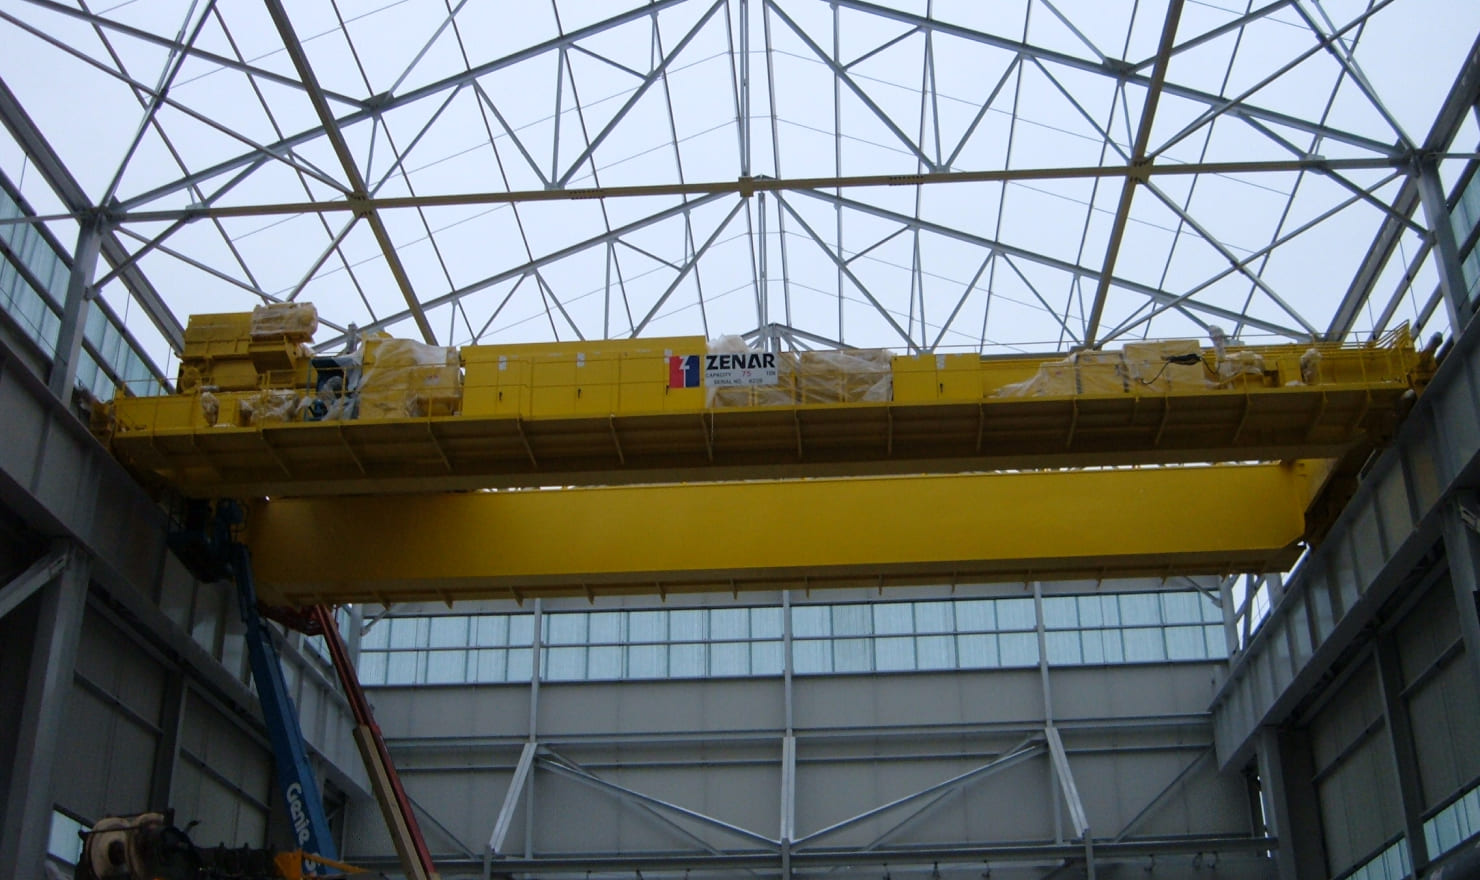 Zenar overhead crane inside production facility